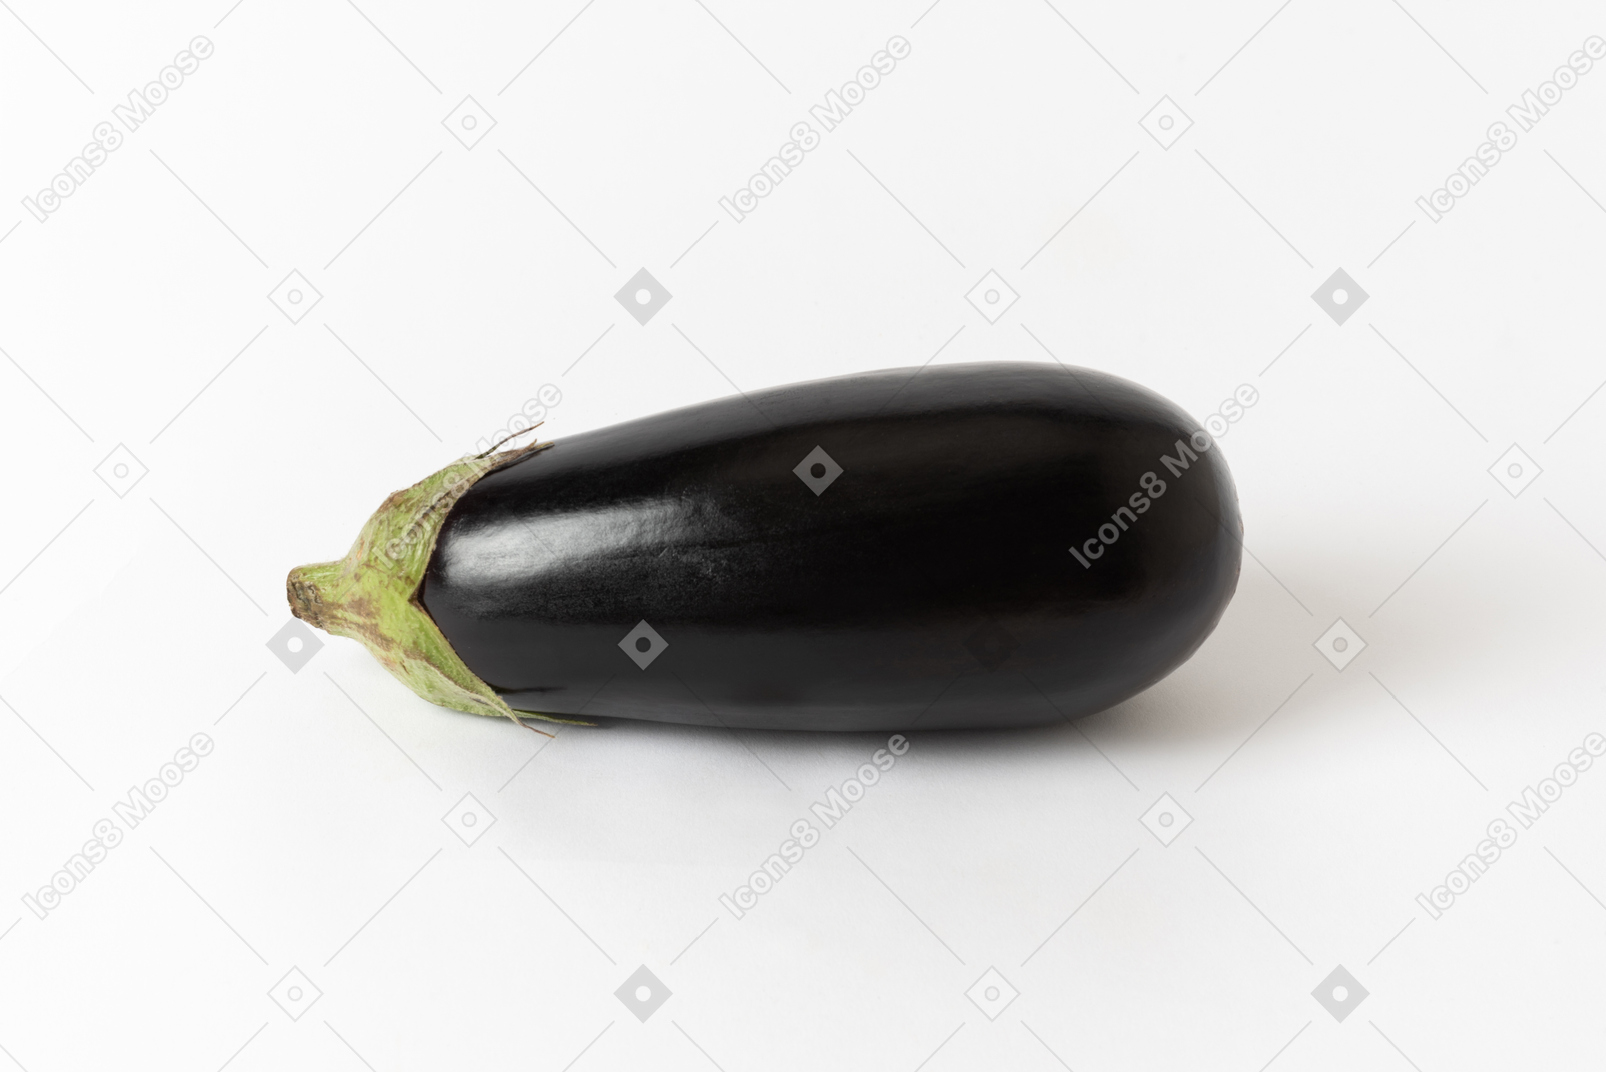 Eggplant on a white background